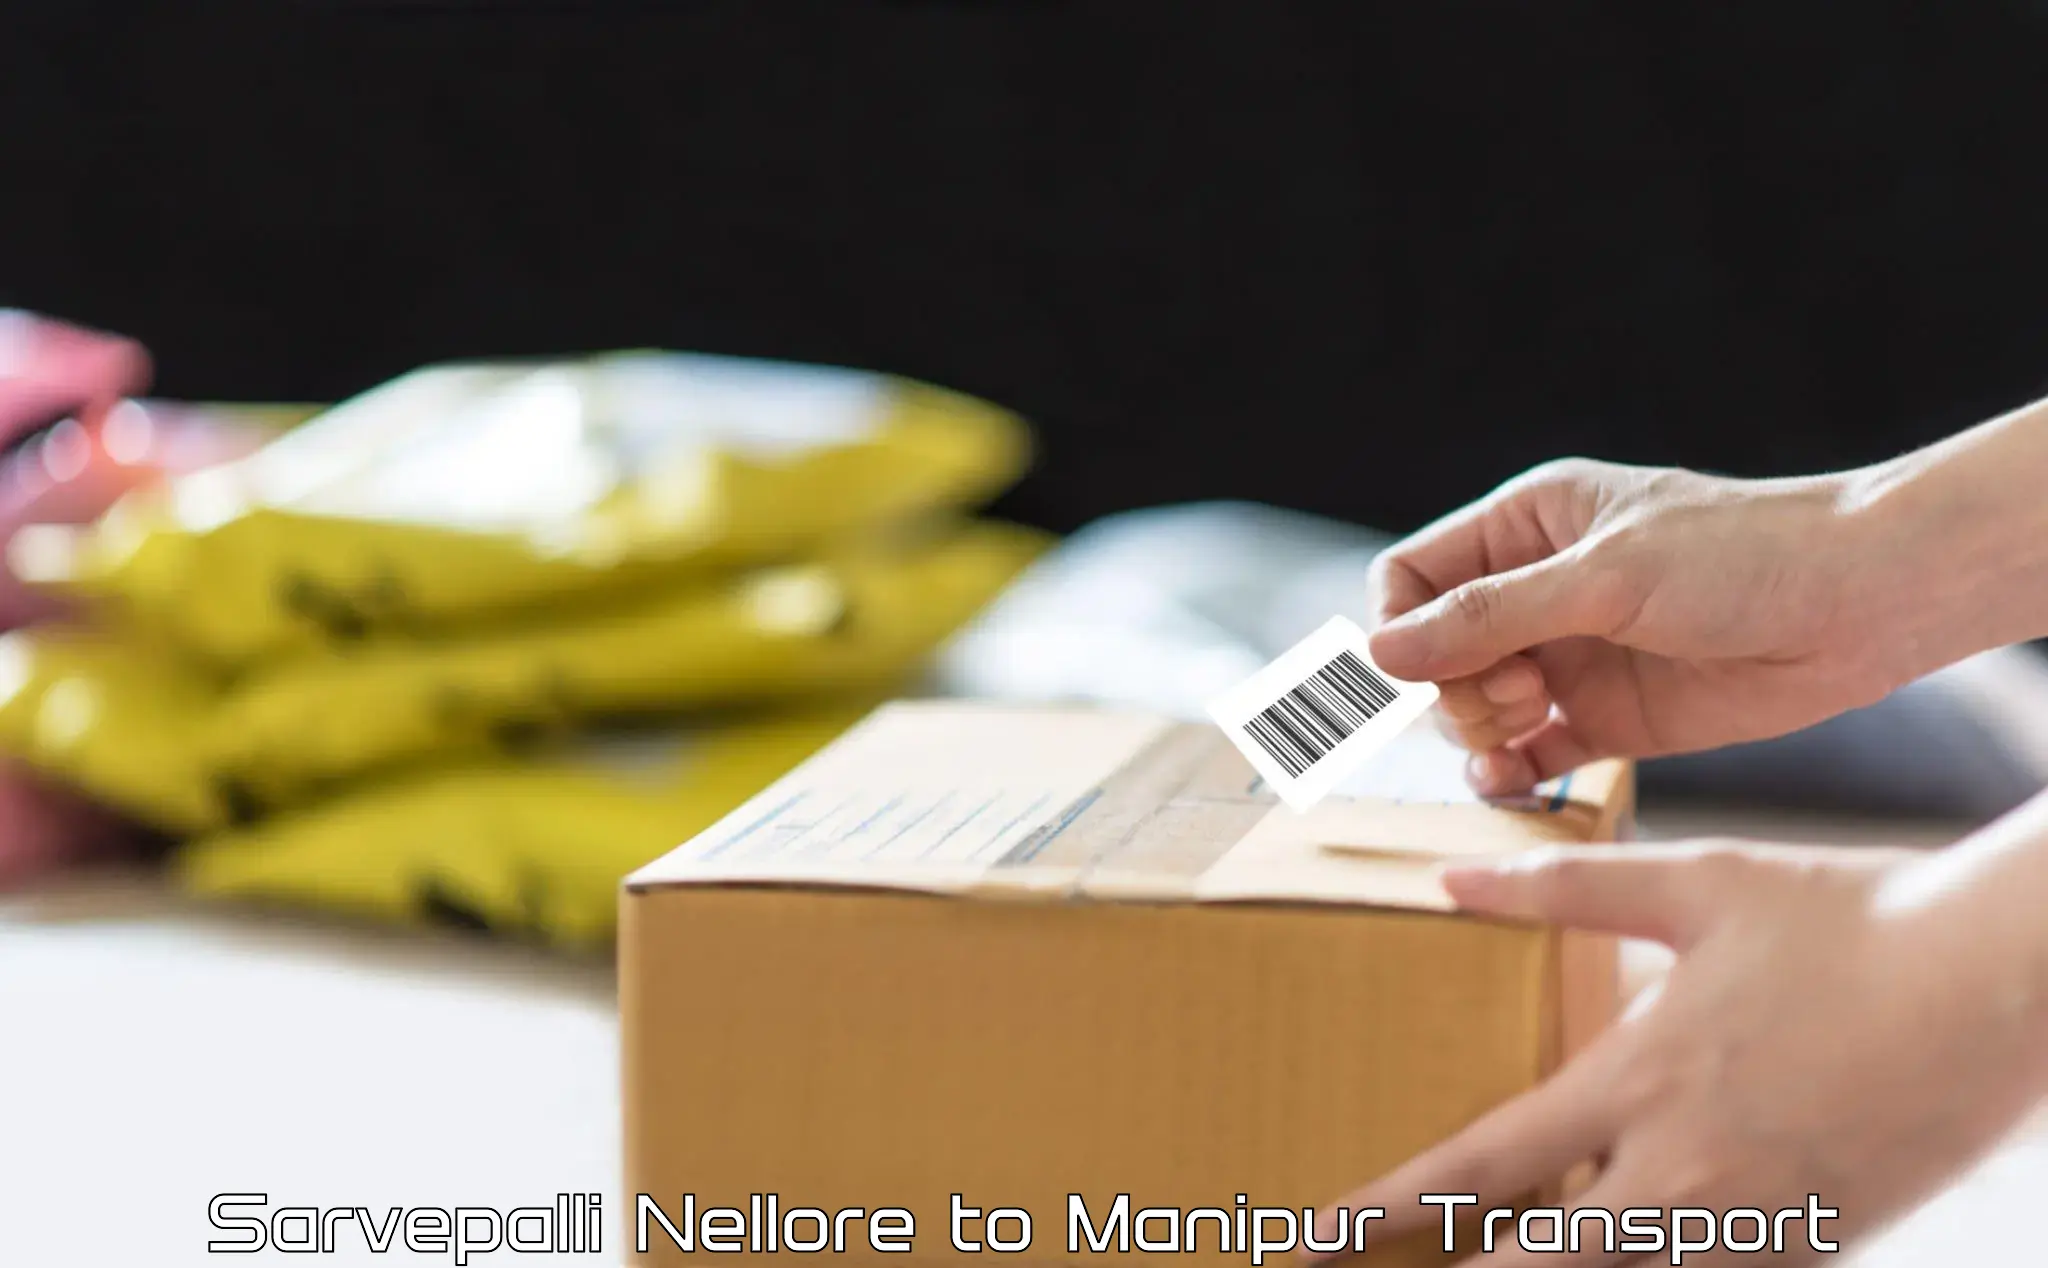 Commercial transport service Sarvepalli Nellore to Manipur